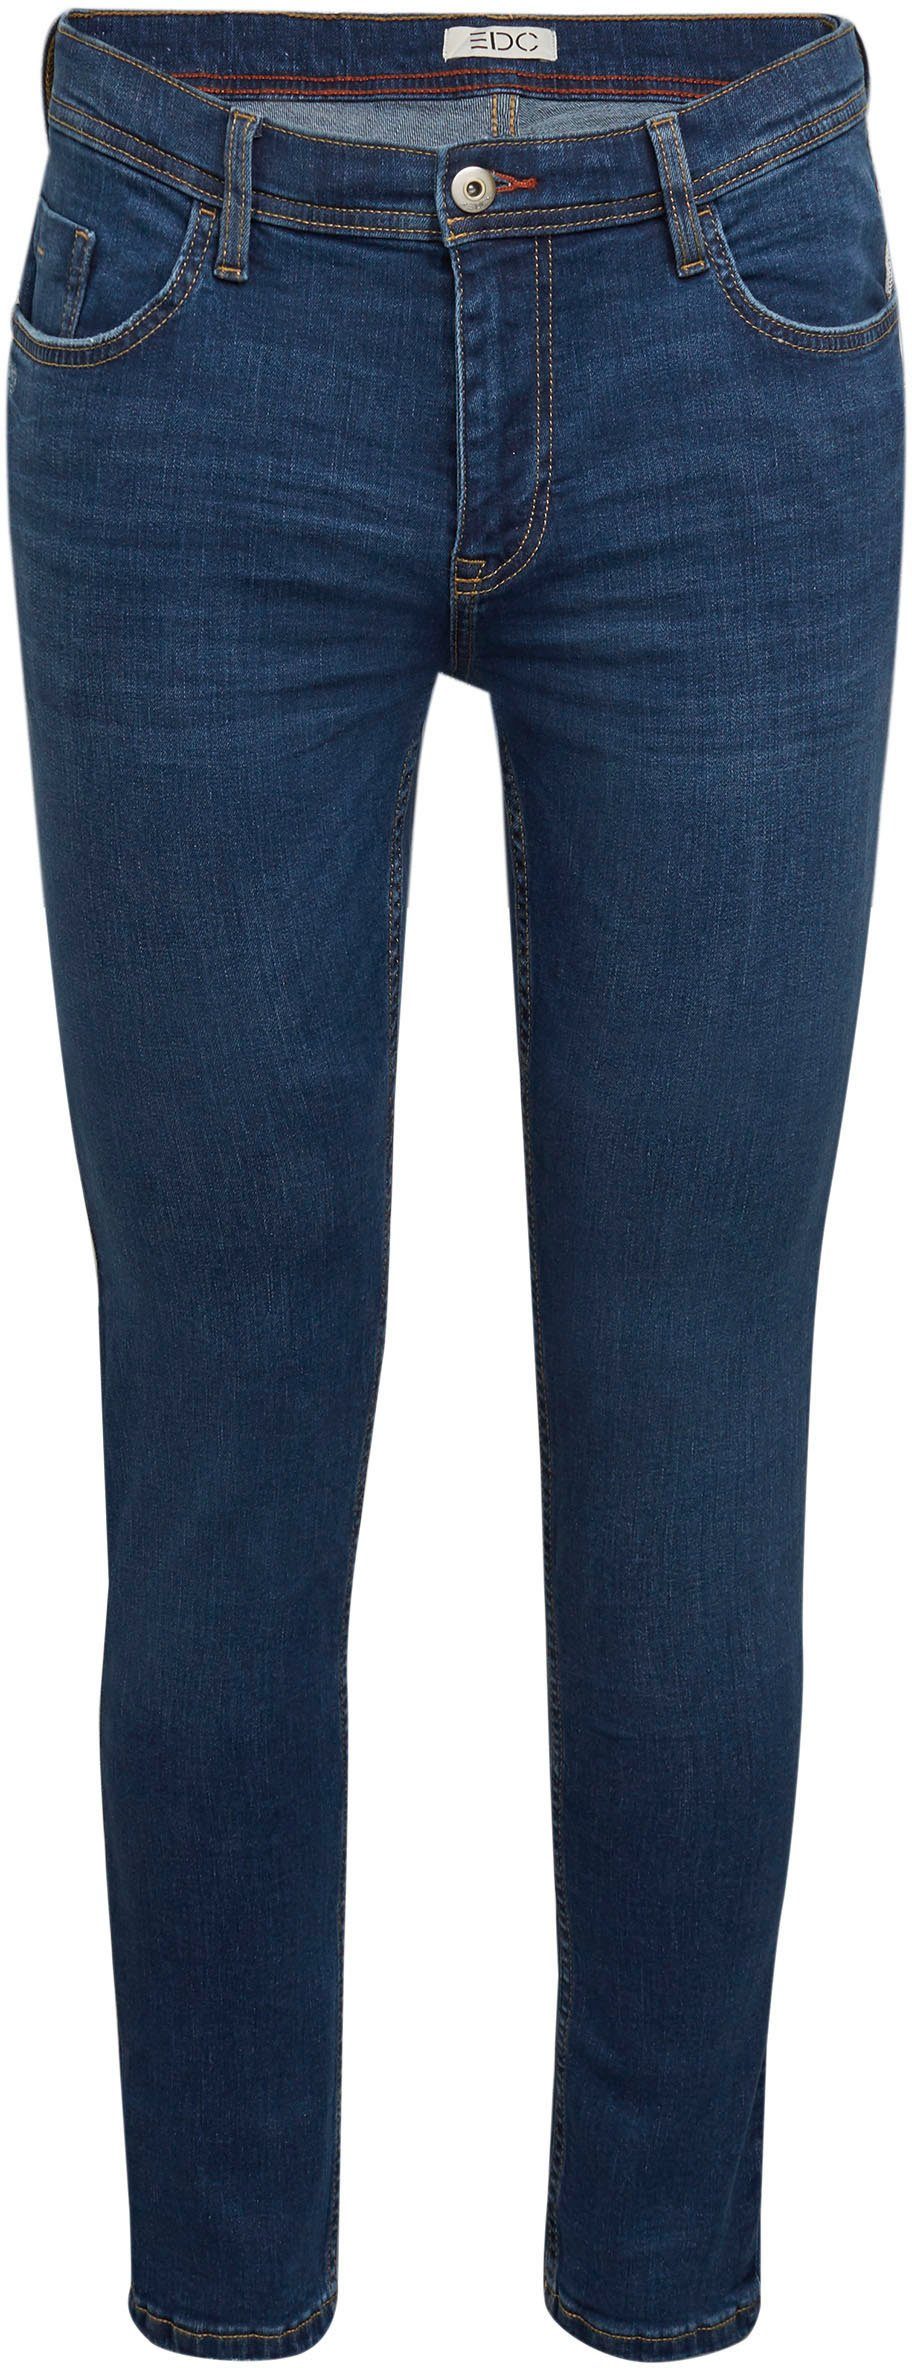 Edc By Esprit Denim Skinny Fit Jeans mit Stretch-Anteil in Blau Damen Bekleidung Jeans Röhrenjeans 